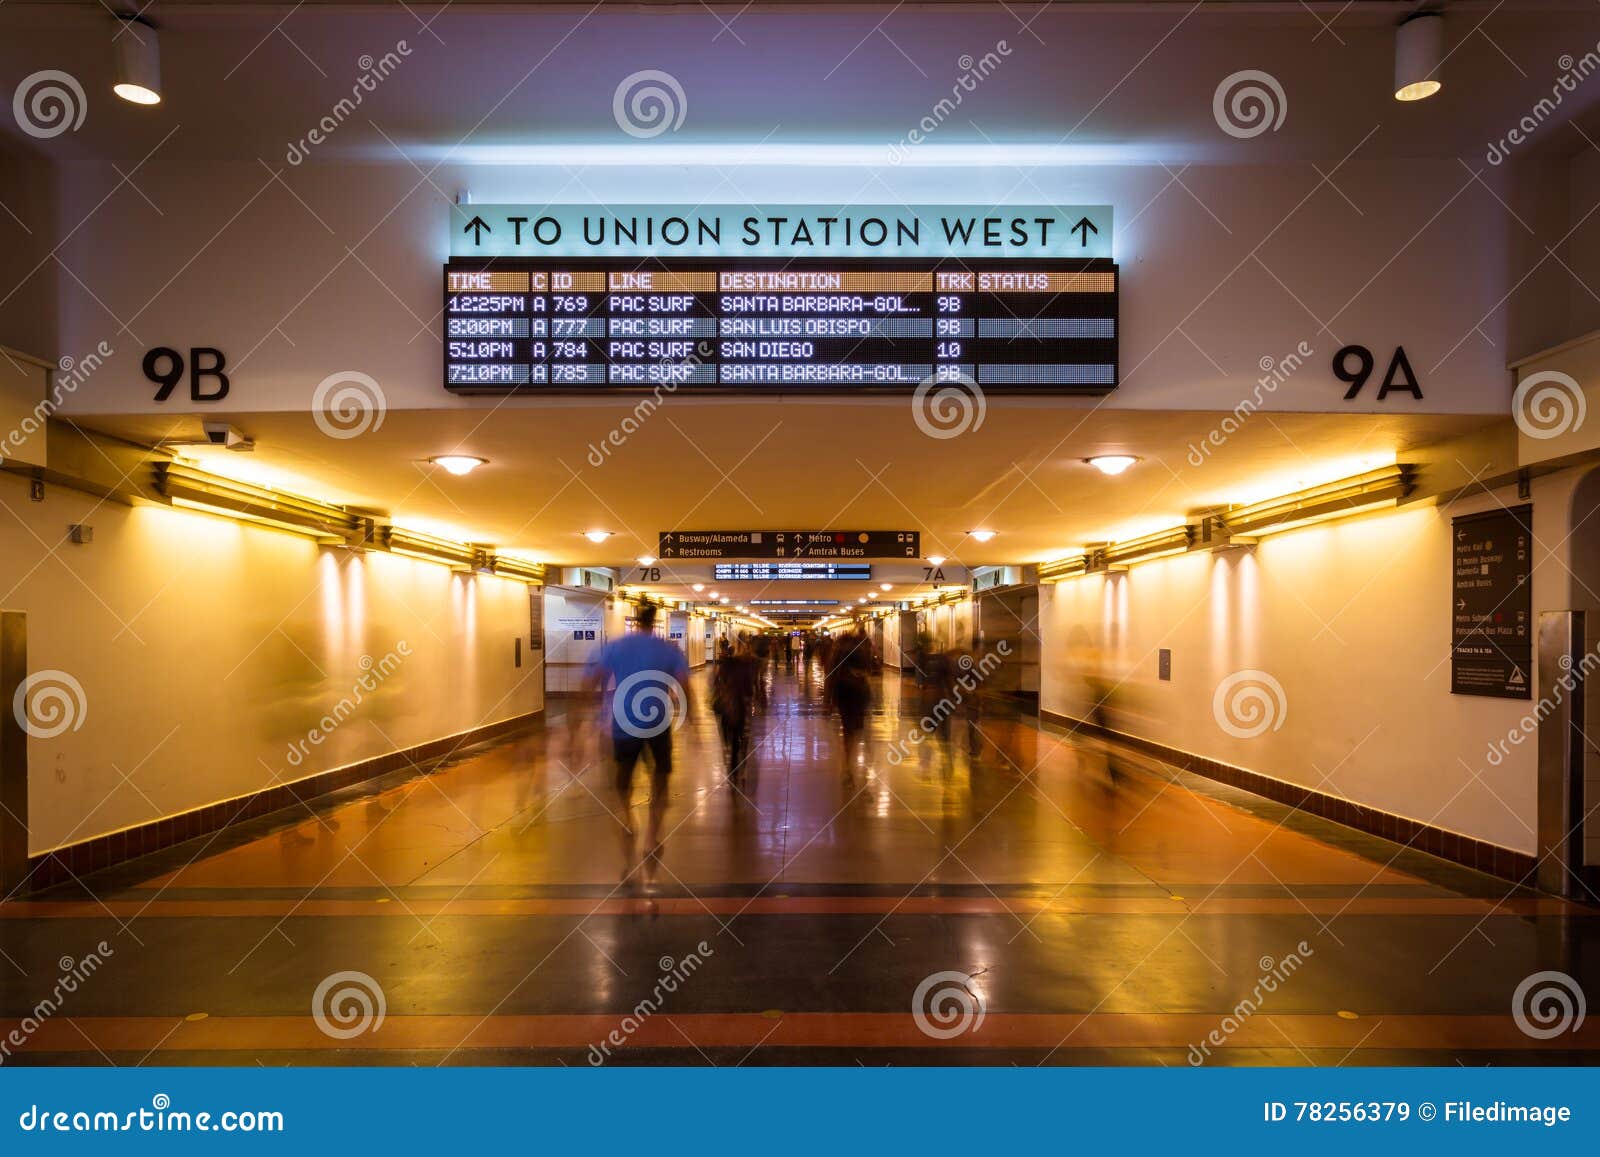 Включи станцию стоп. Вокзал Юнион Стейшн Лос Анджелес. Вокзал Юнион Стейшн в Лос Анджелесе. Union Station, Центральном Железнодорожном вокзале Лос-Анджелеса. Юнион Стейшн Лос Анджелес грузоперевозки.